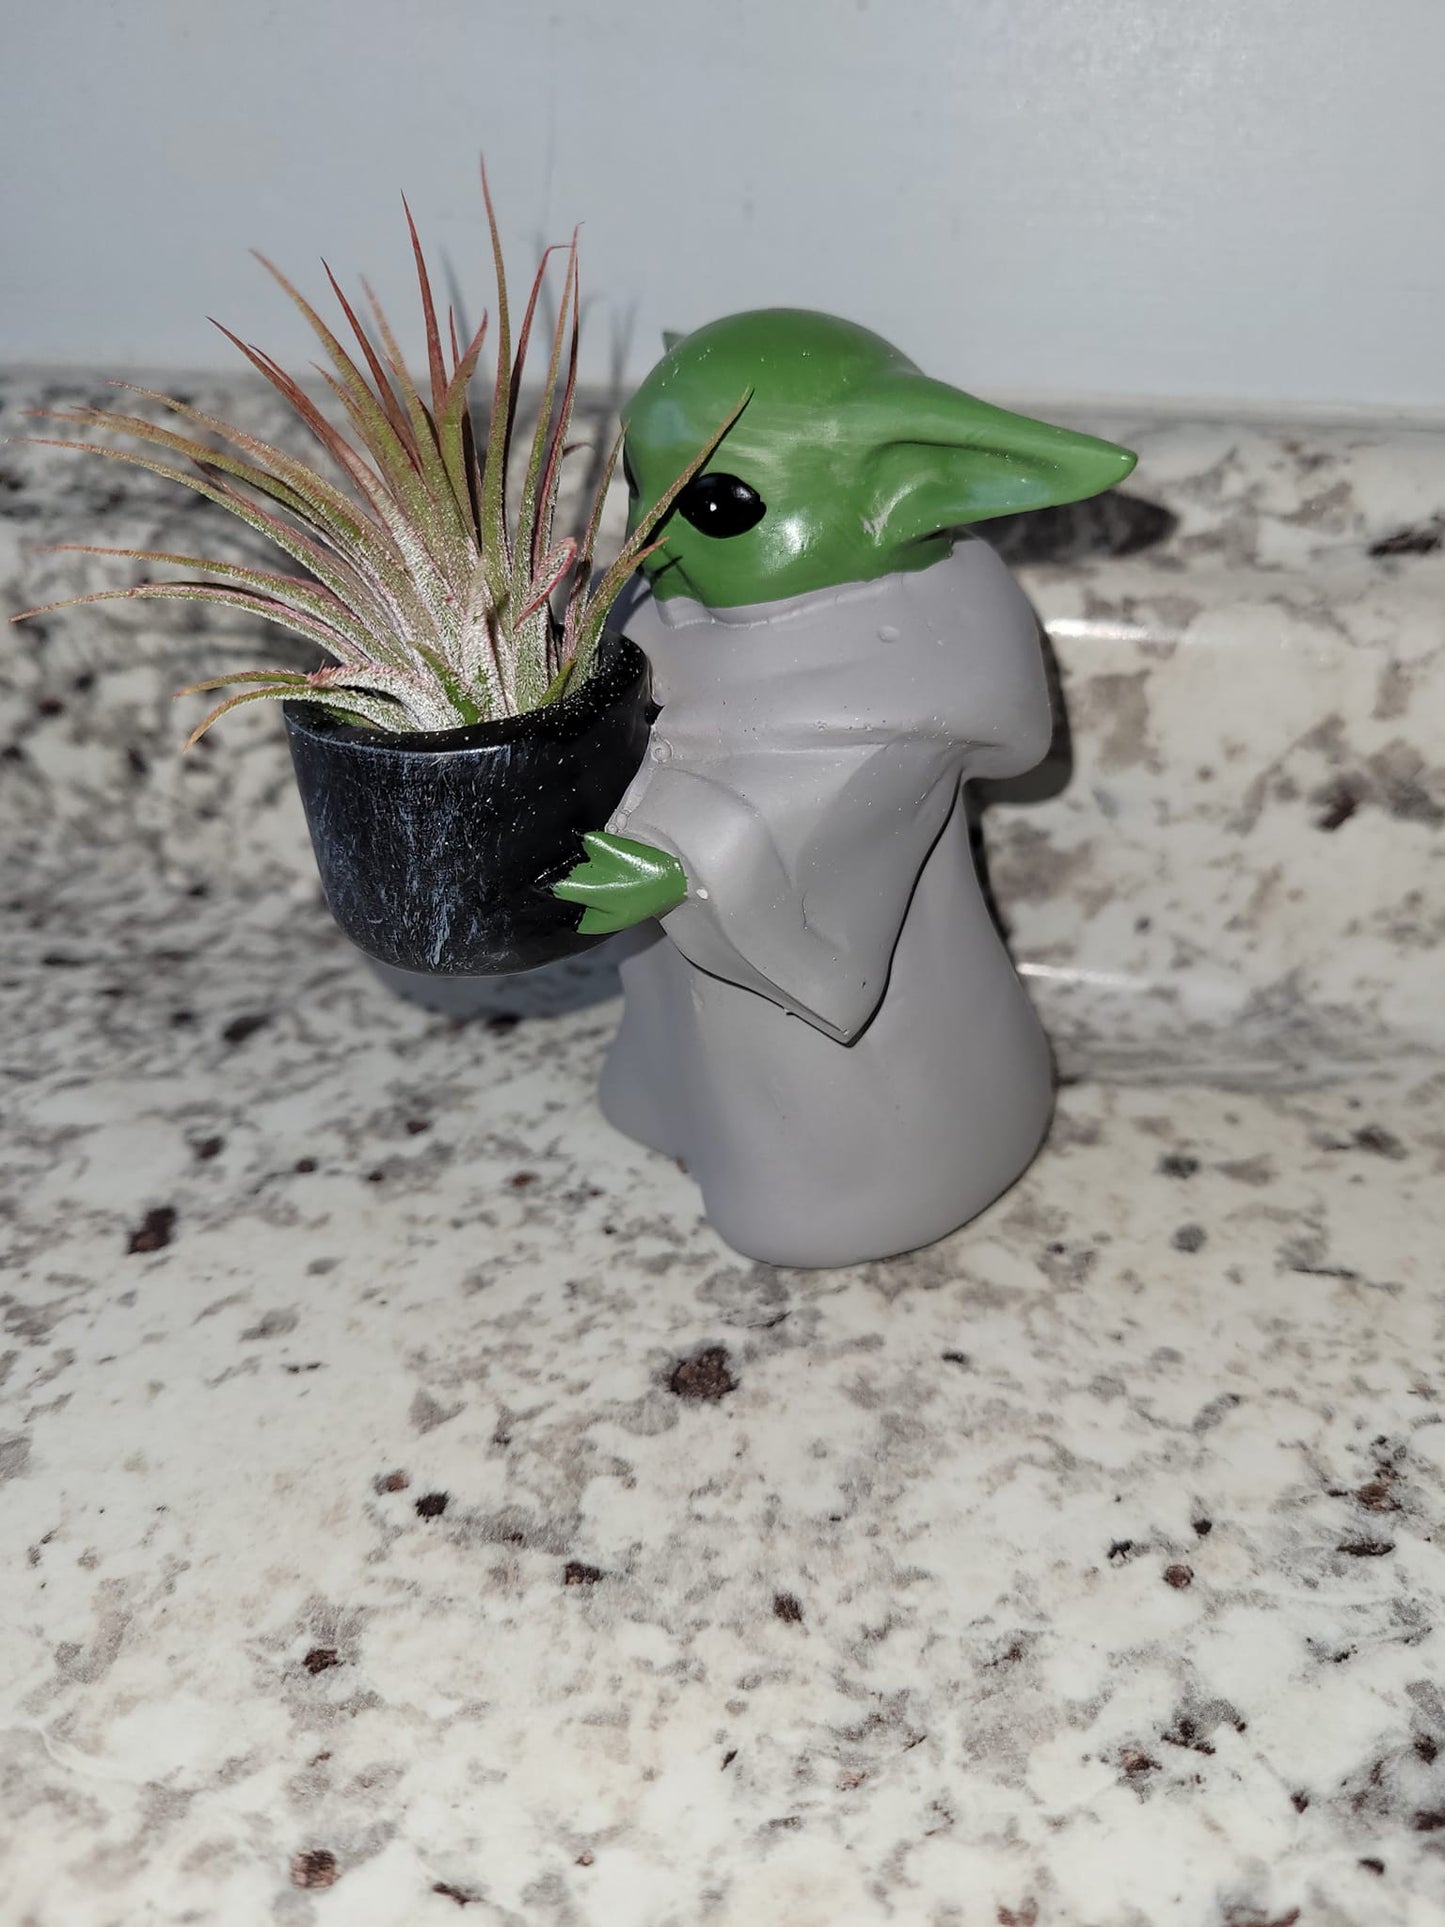 Grogu Baby Yoda